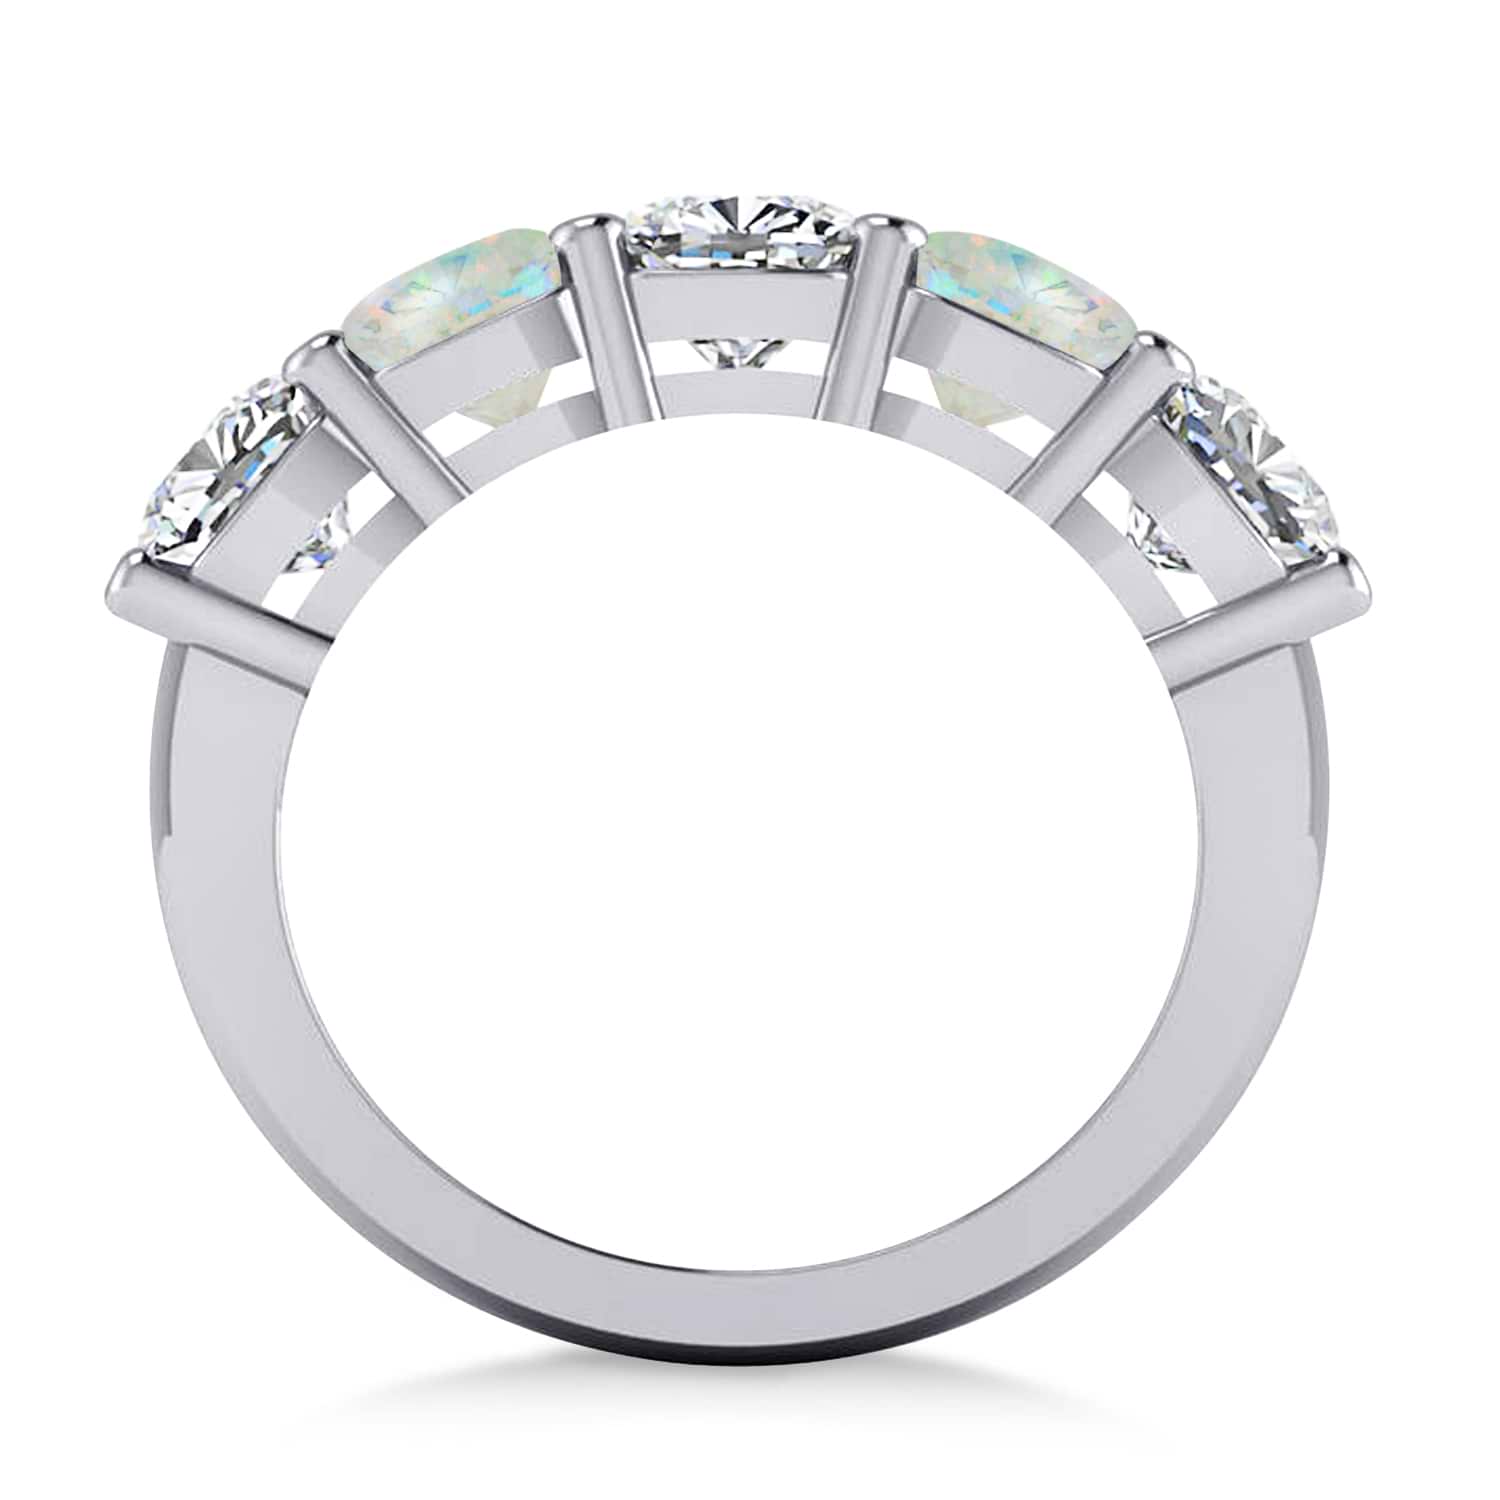 Cushion Diamond & Opal Five Stone Ring 14k White Gold (4.05ct)